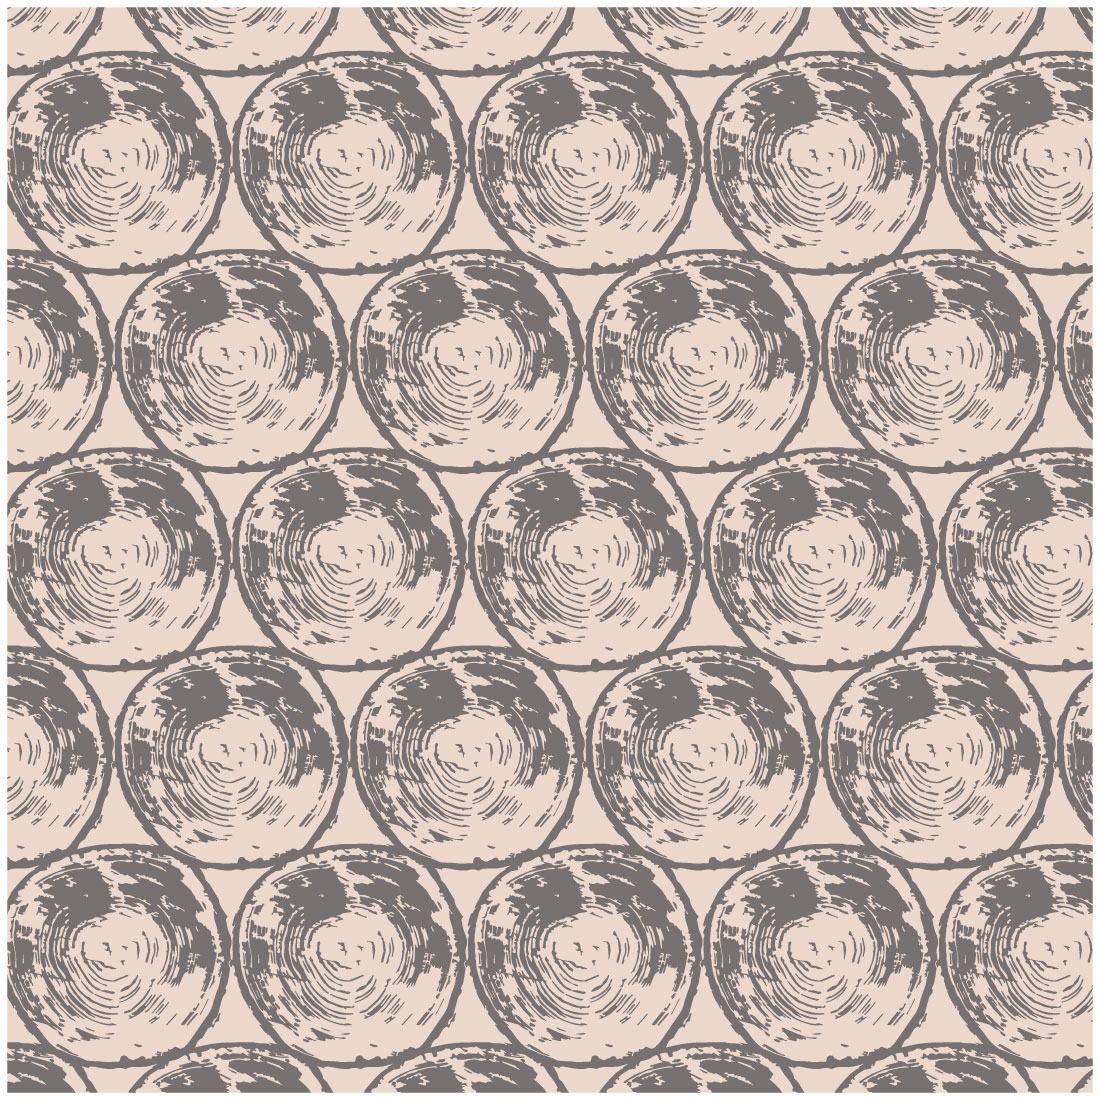 patterns woodgrain2 395